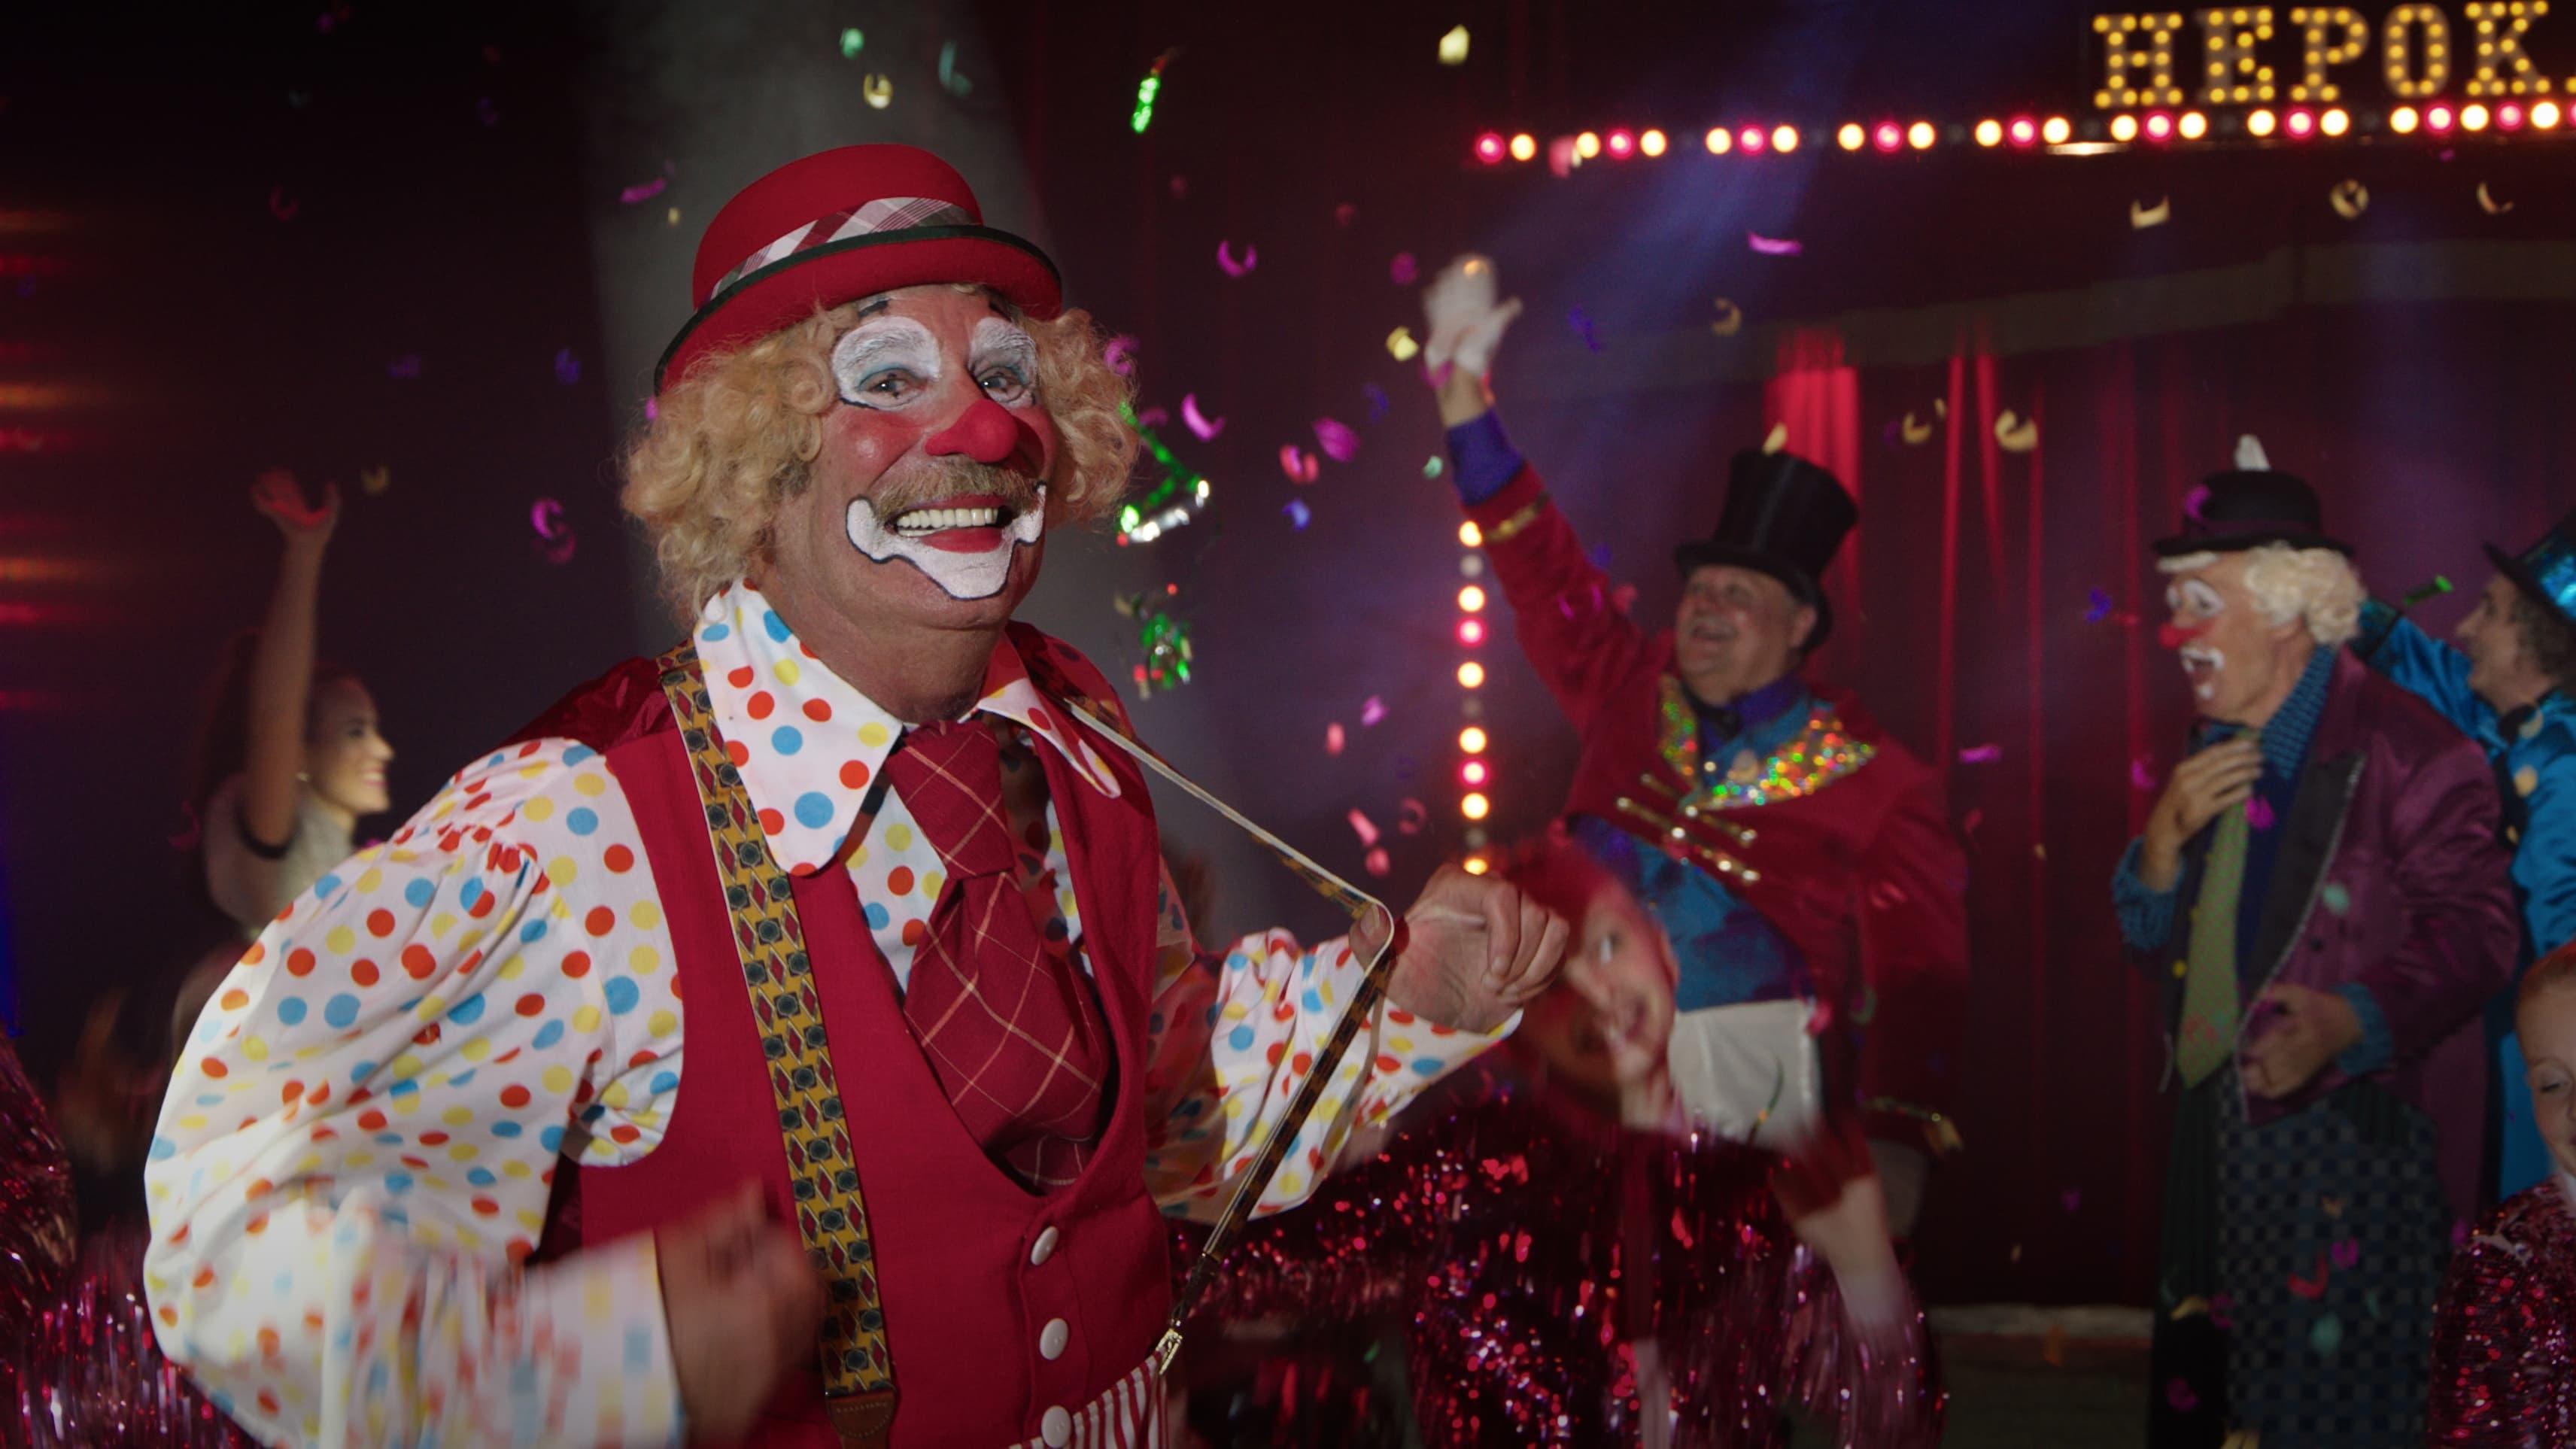 Herman the Circus Clown backdrop